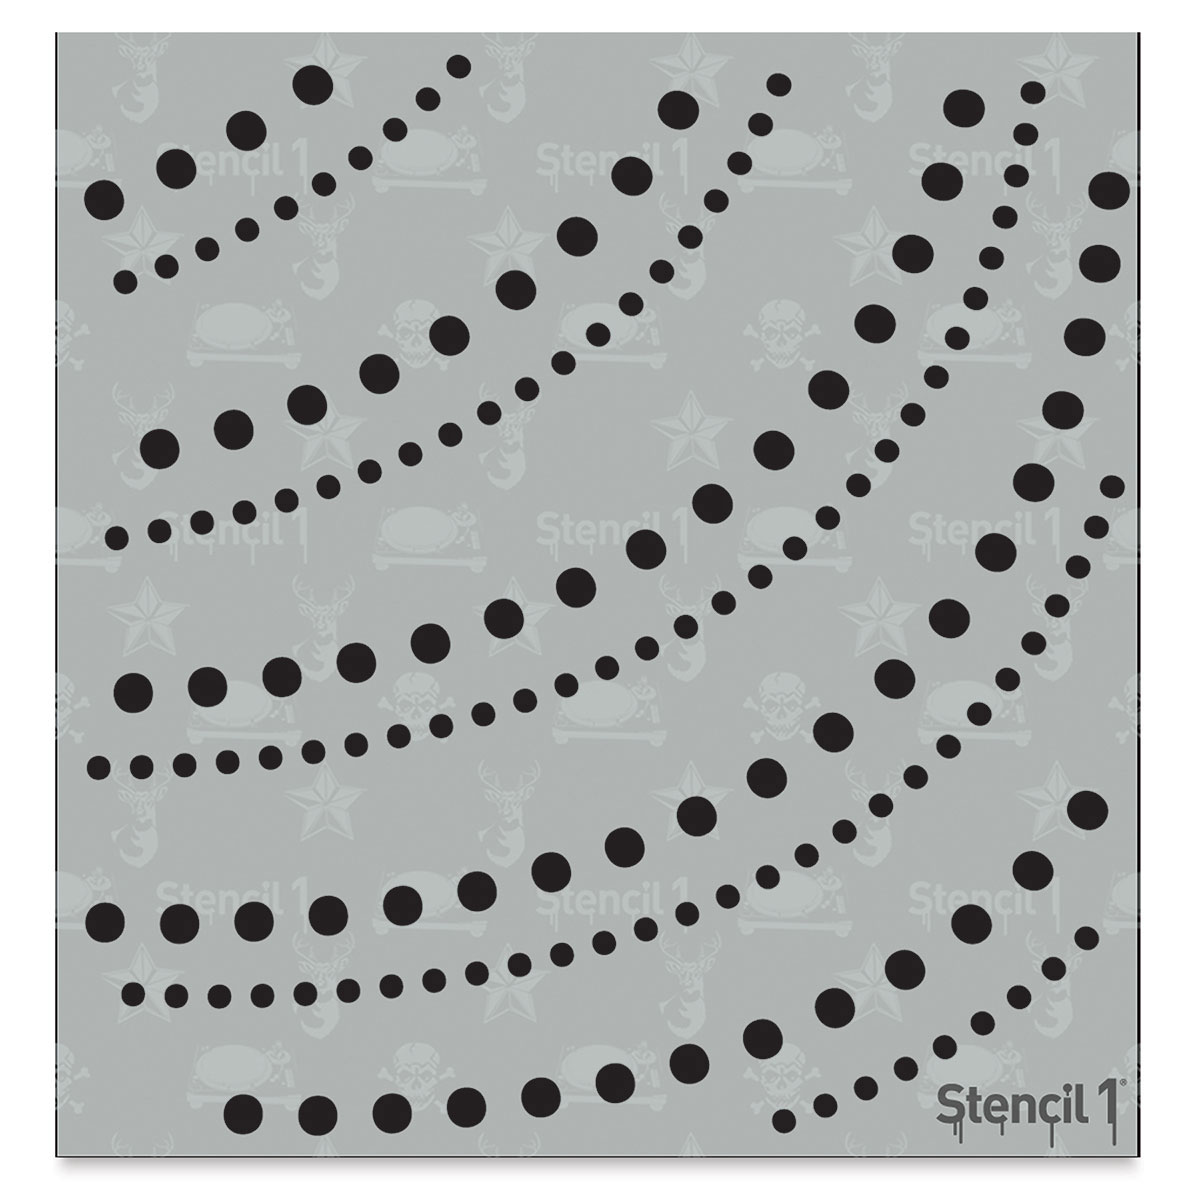 Blockhead “Stacked” Logo spray paint stencil - MORE SOON!